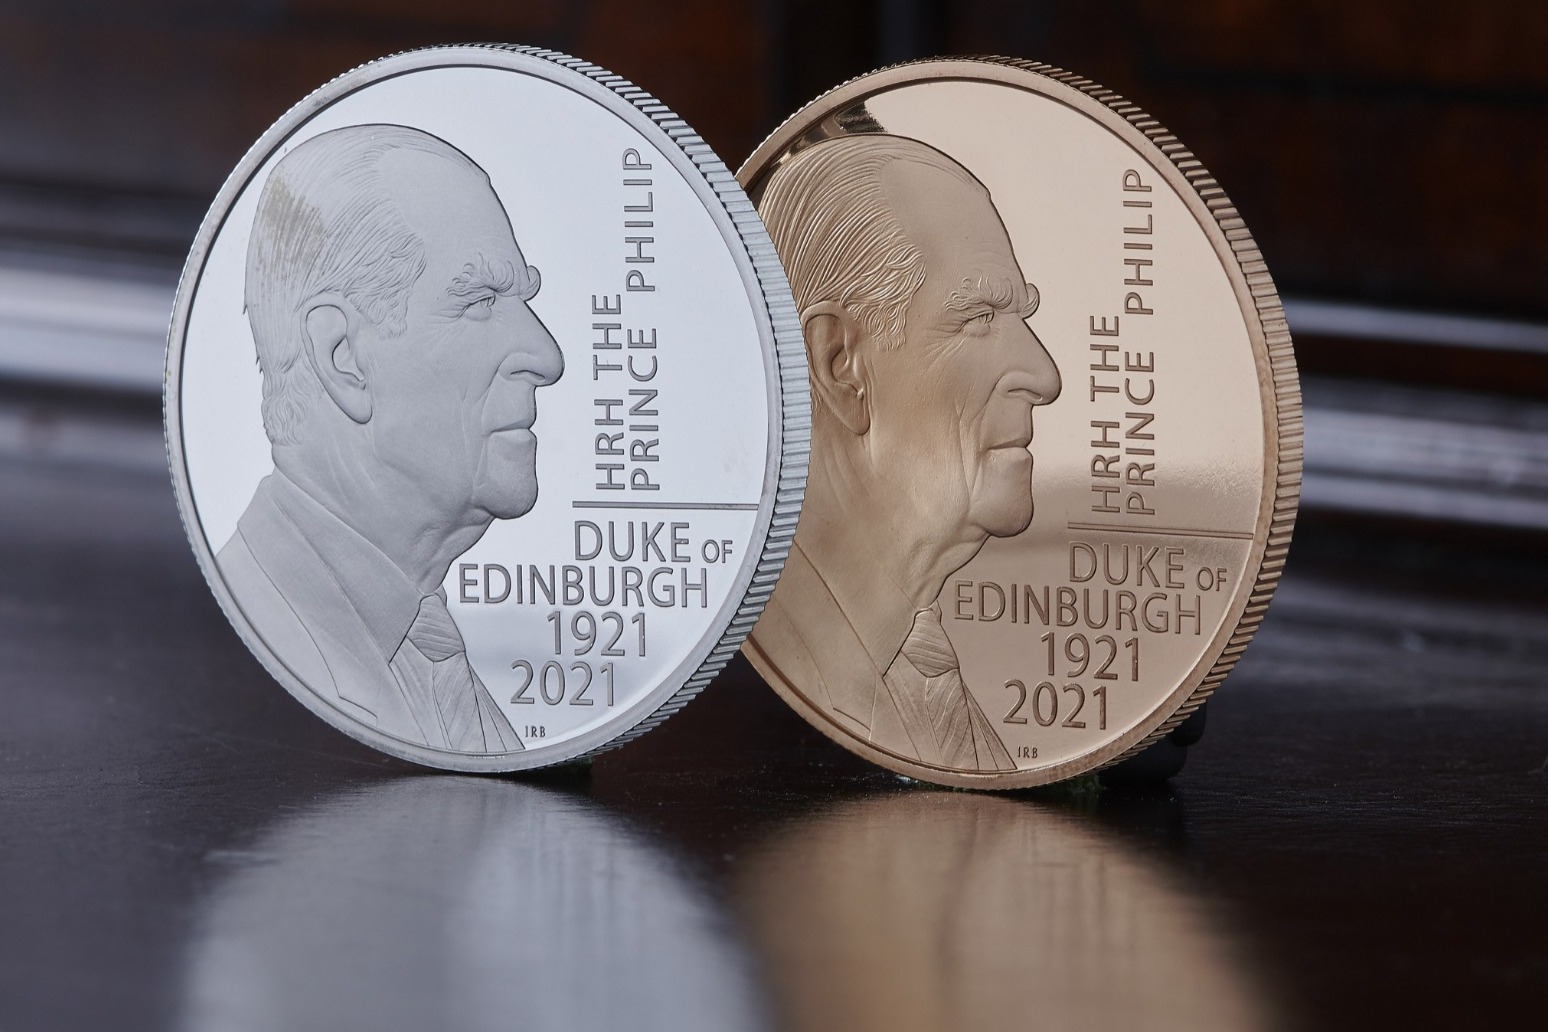 New £5 coin unveiled commemorating the Duke of Edinburgh 